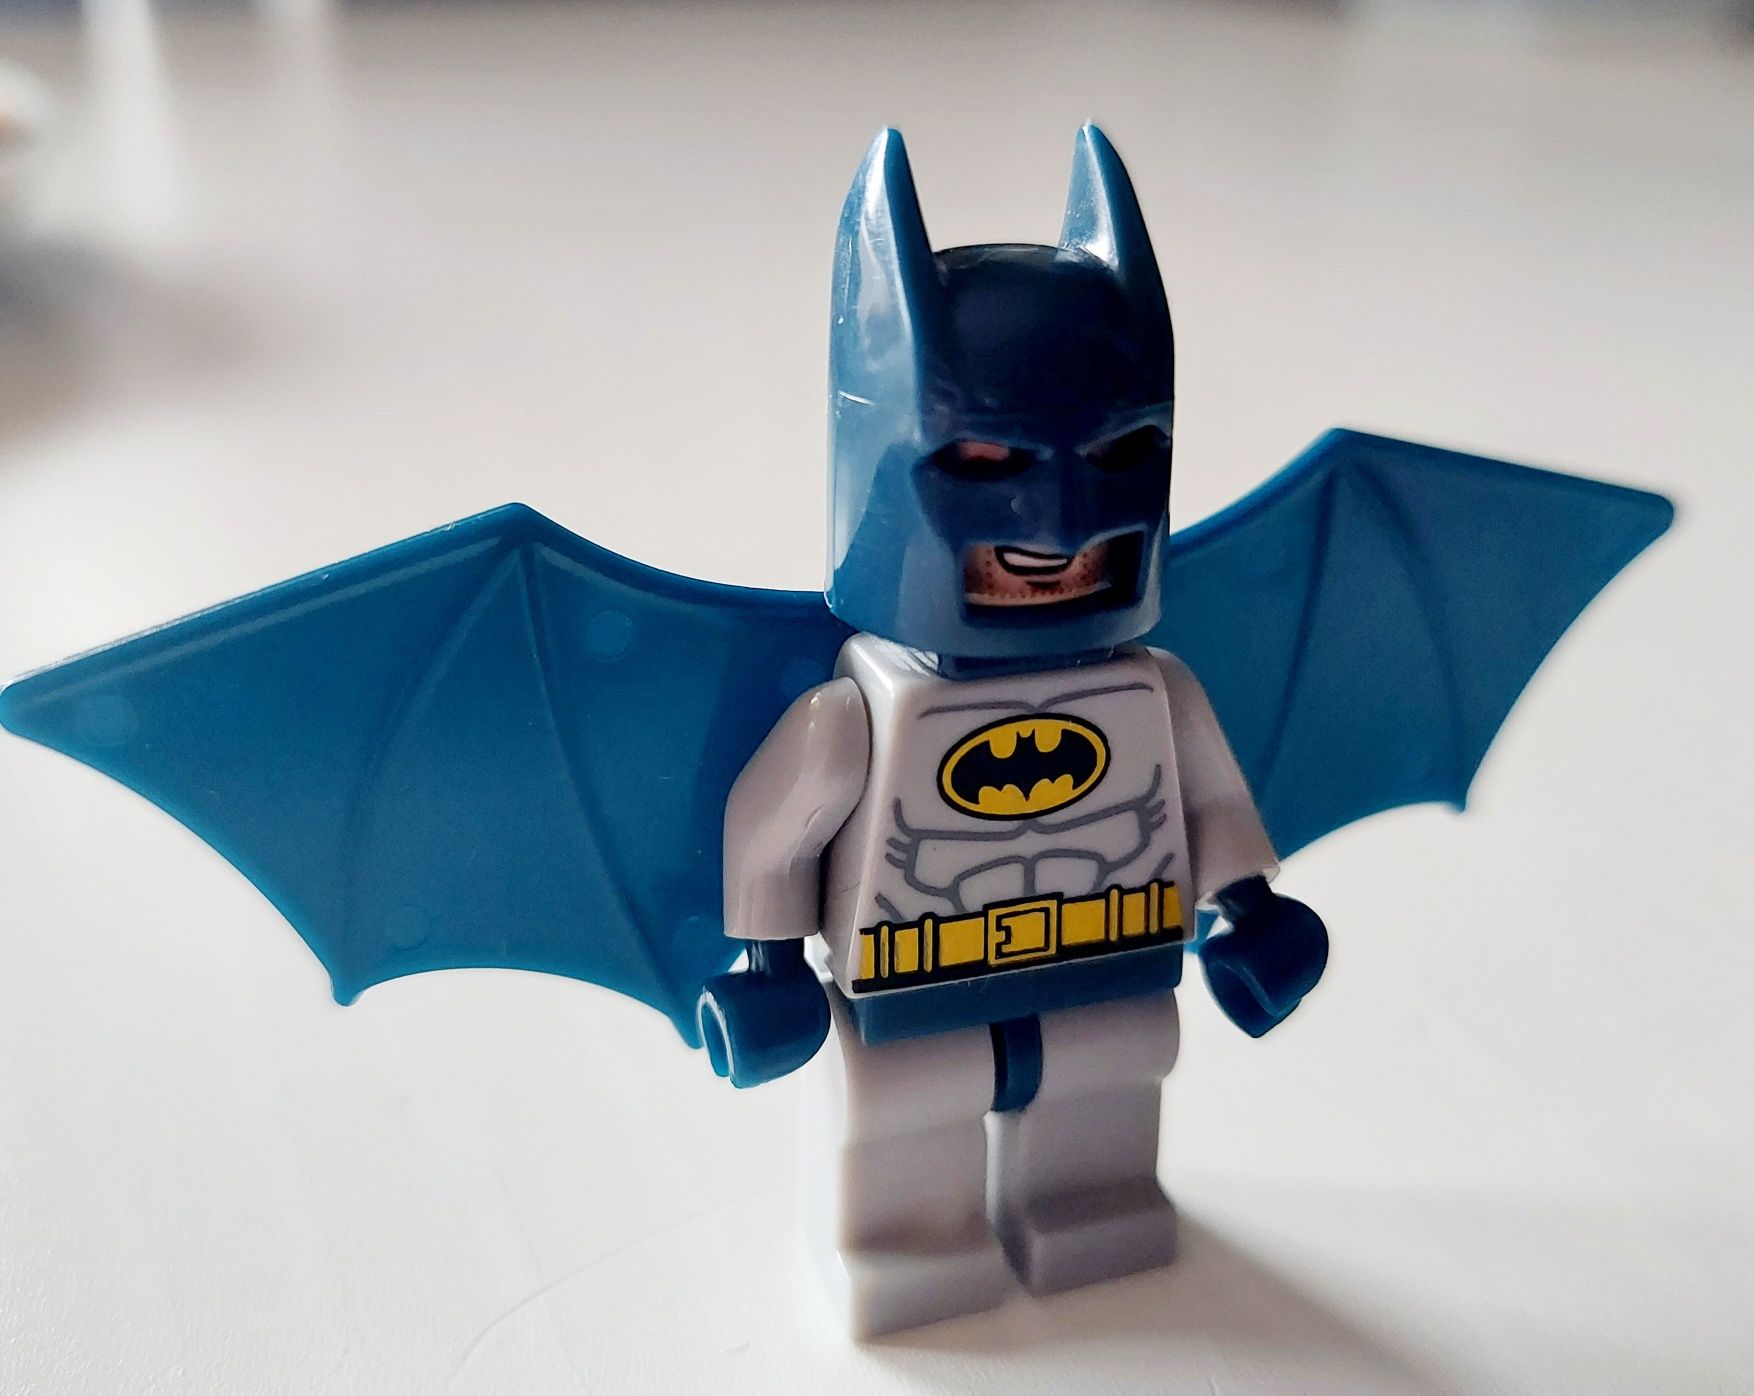 LEGO Batman minifigurka, ludzik